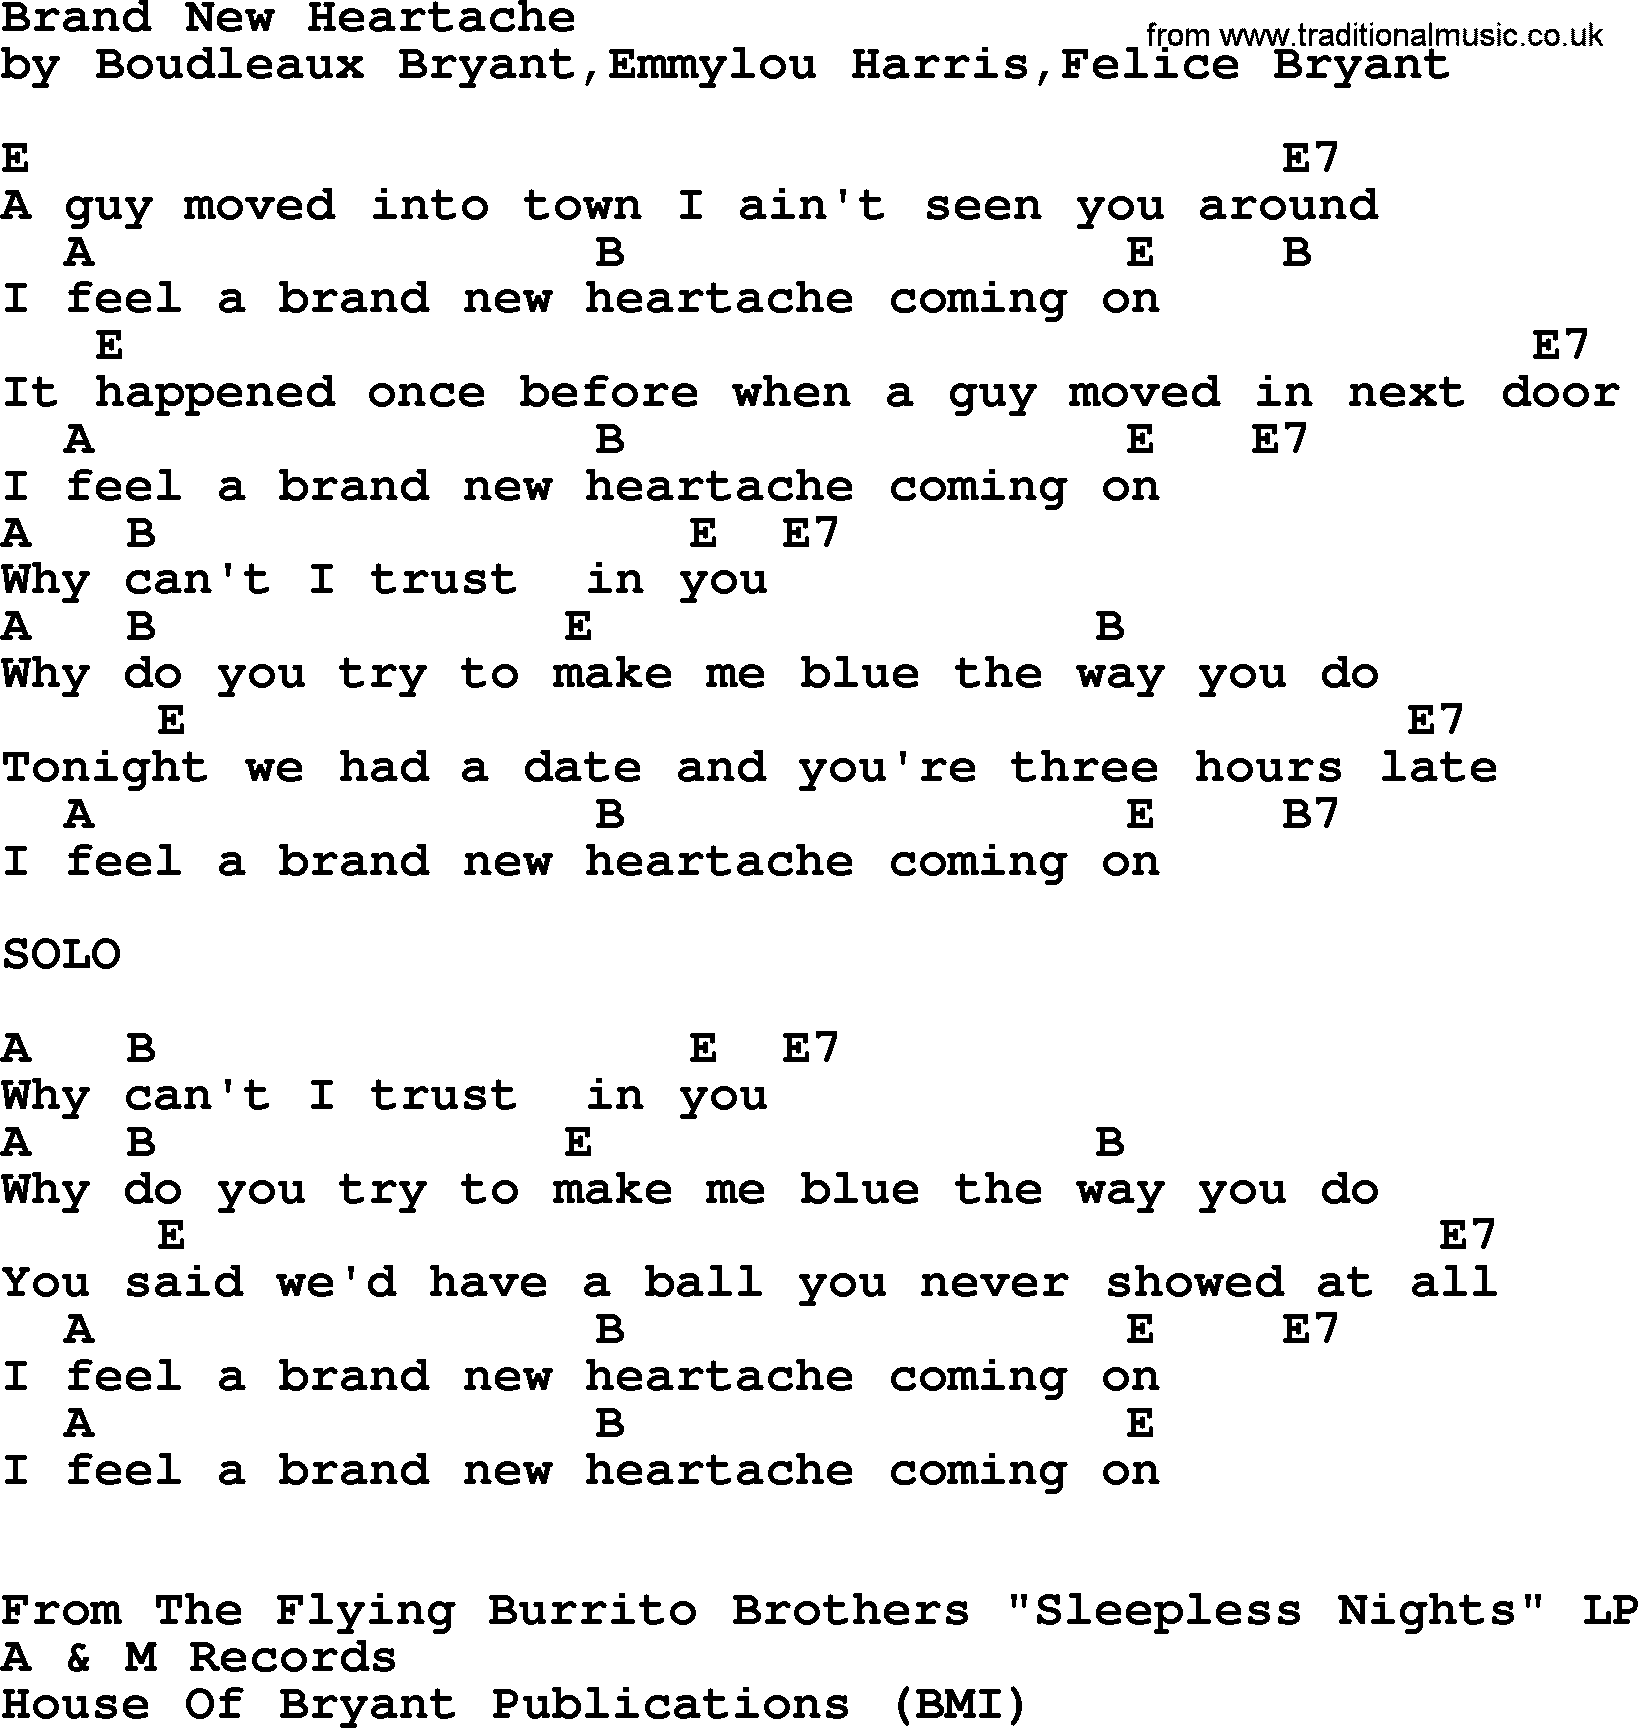 Emmylou Harris song: Brand New Heartache lyrics and chords